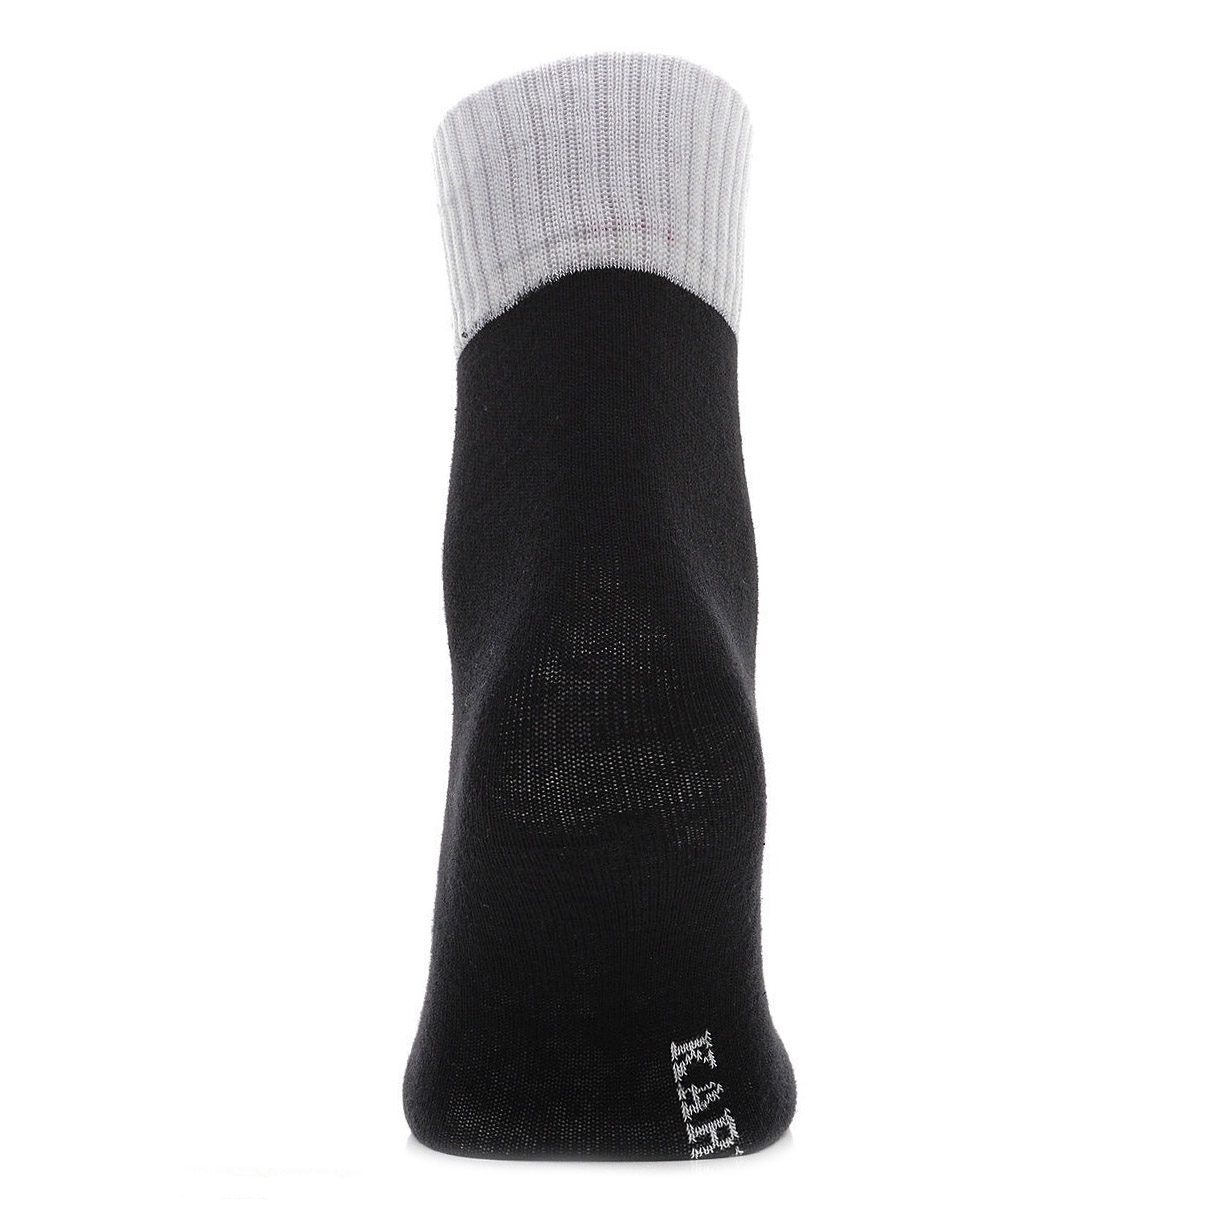 Носки Karmen Calza Look nero M 38-40, цвет черный, размер 38-40 - фото 2